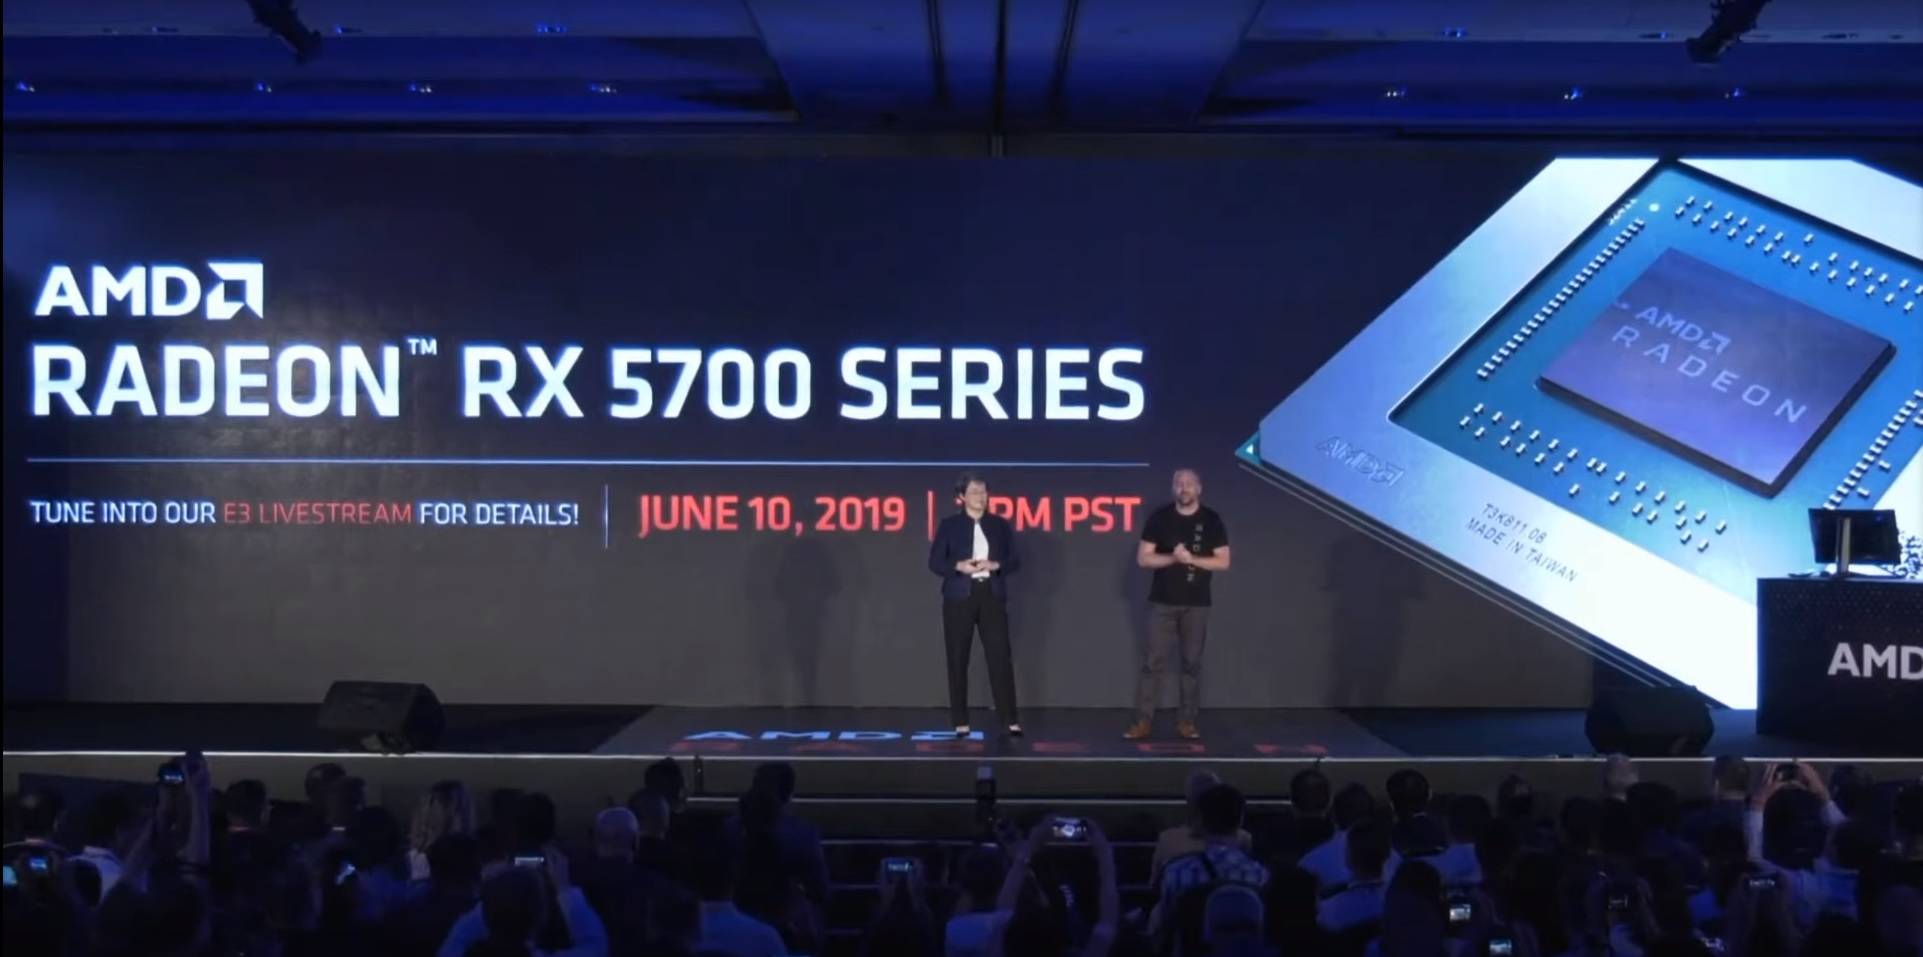 AMD Radeon RX 5700 Graphics Cards